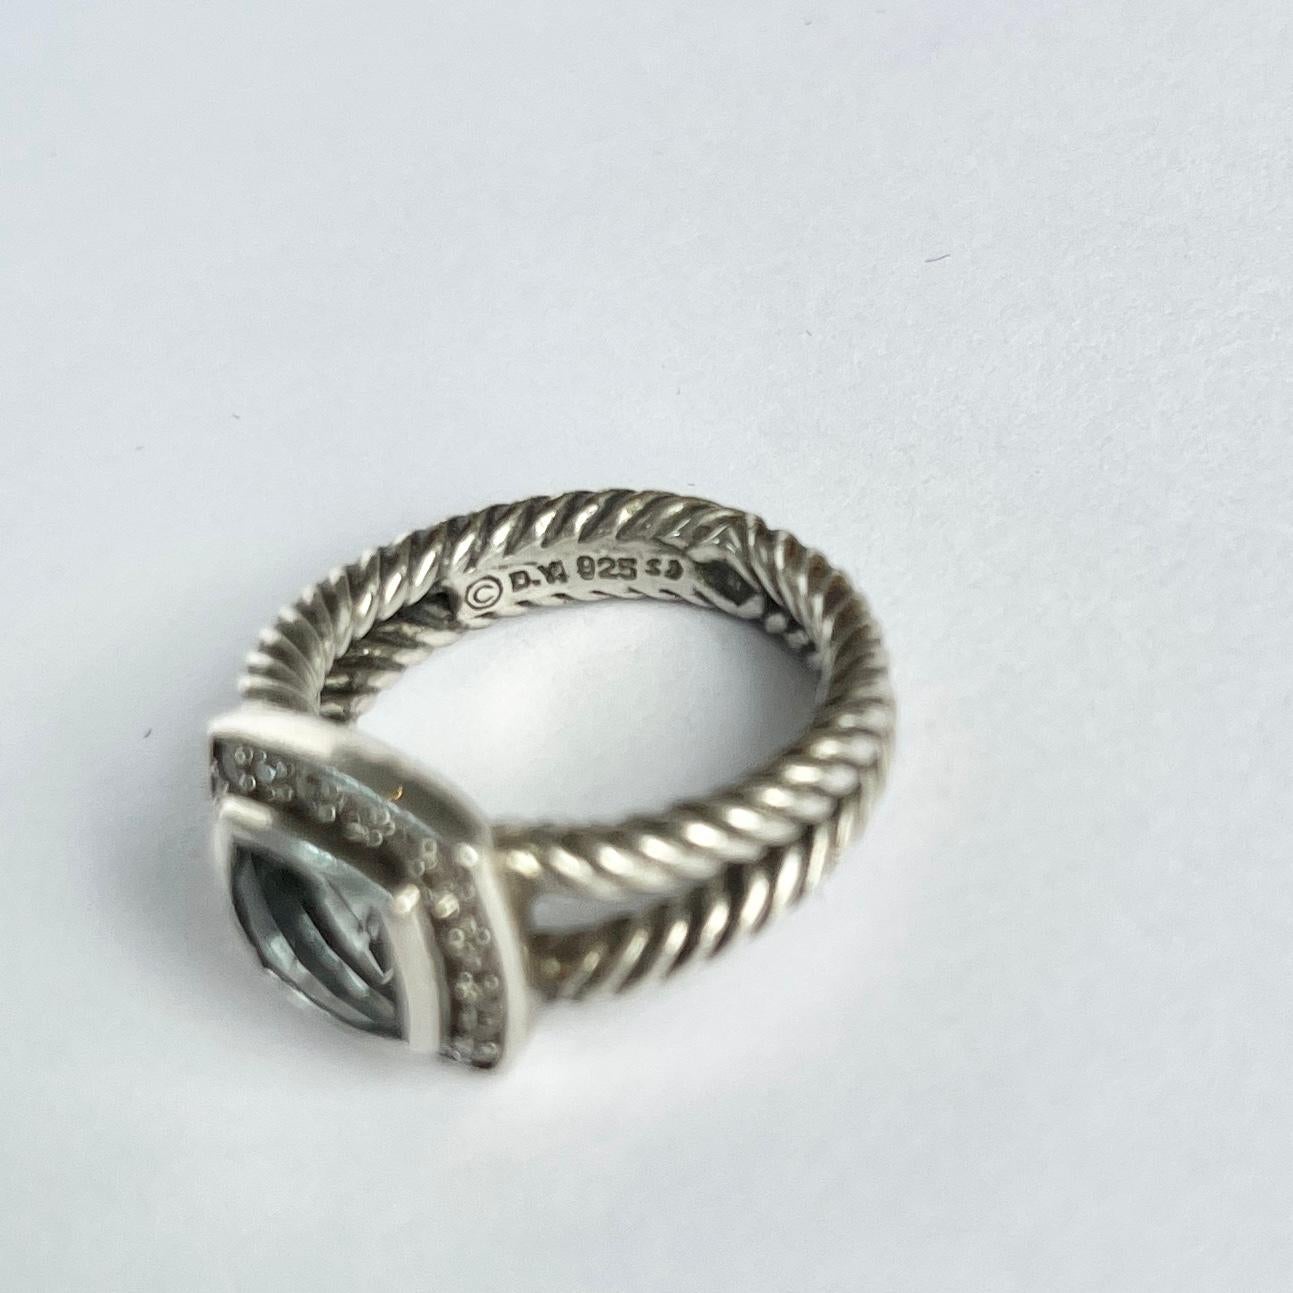 Modern David Yurman Prasiolite Diamond and Silver Cable Band Ring For Sale